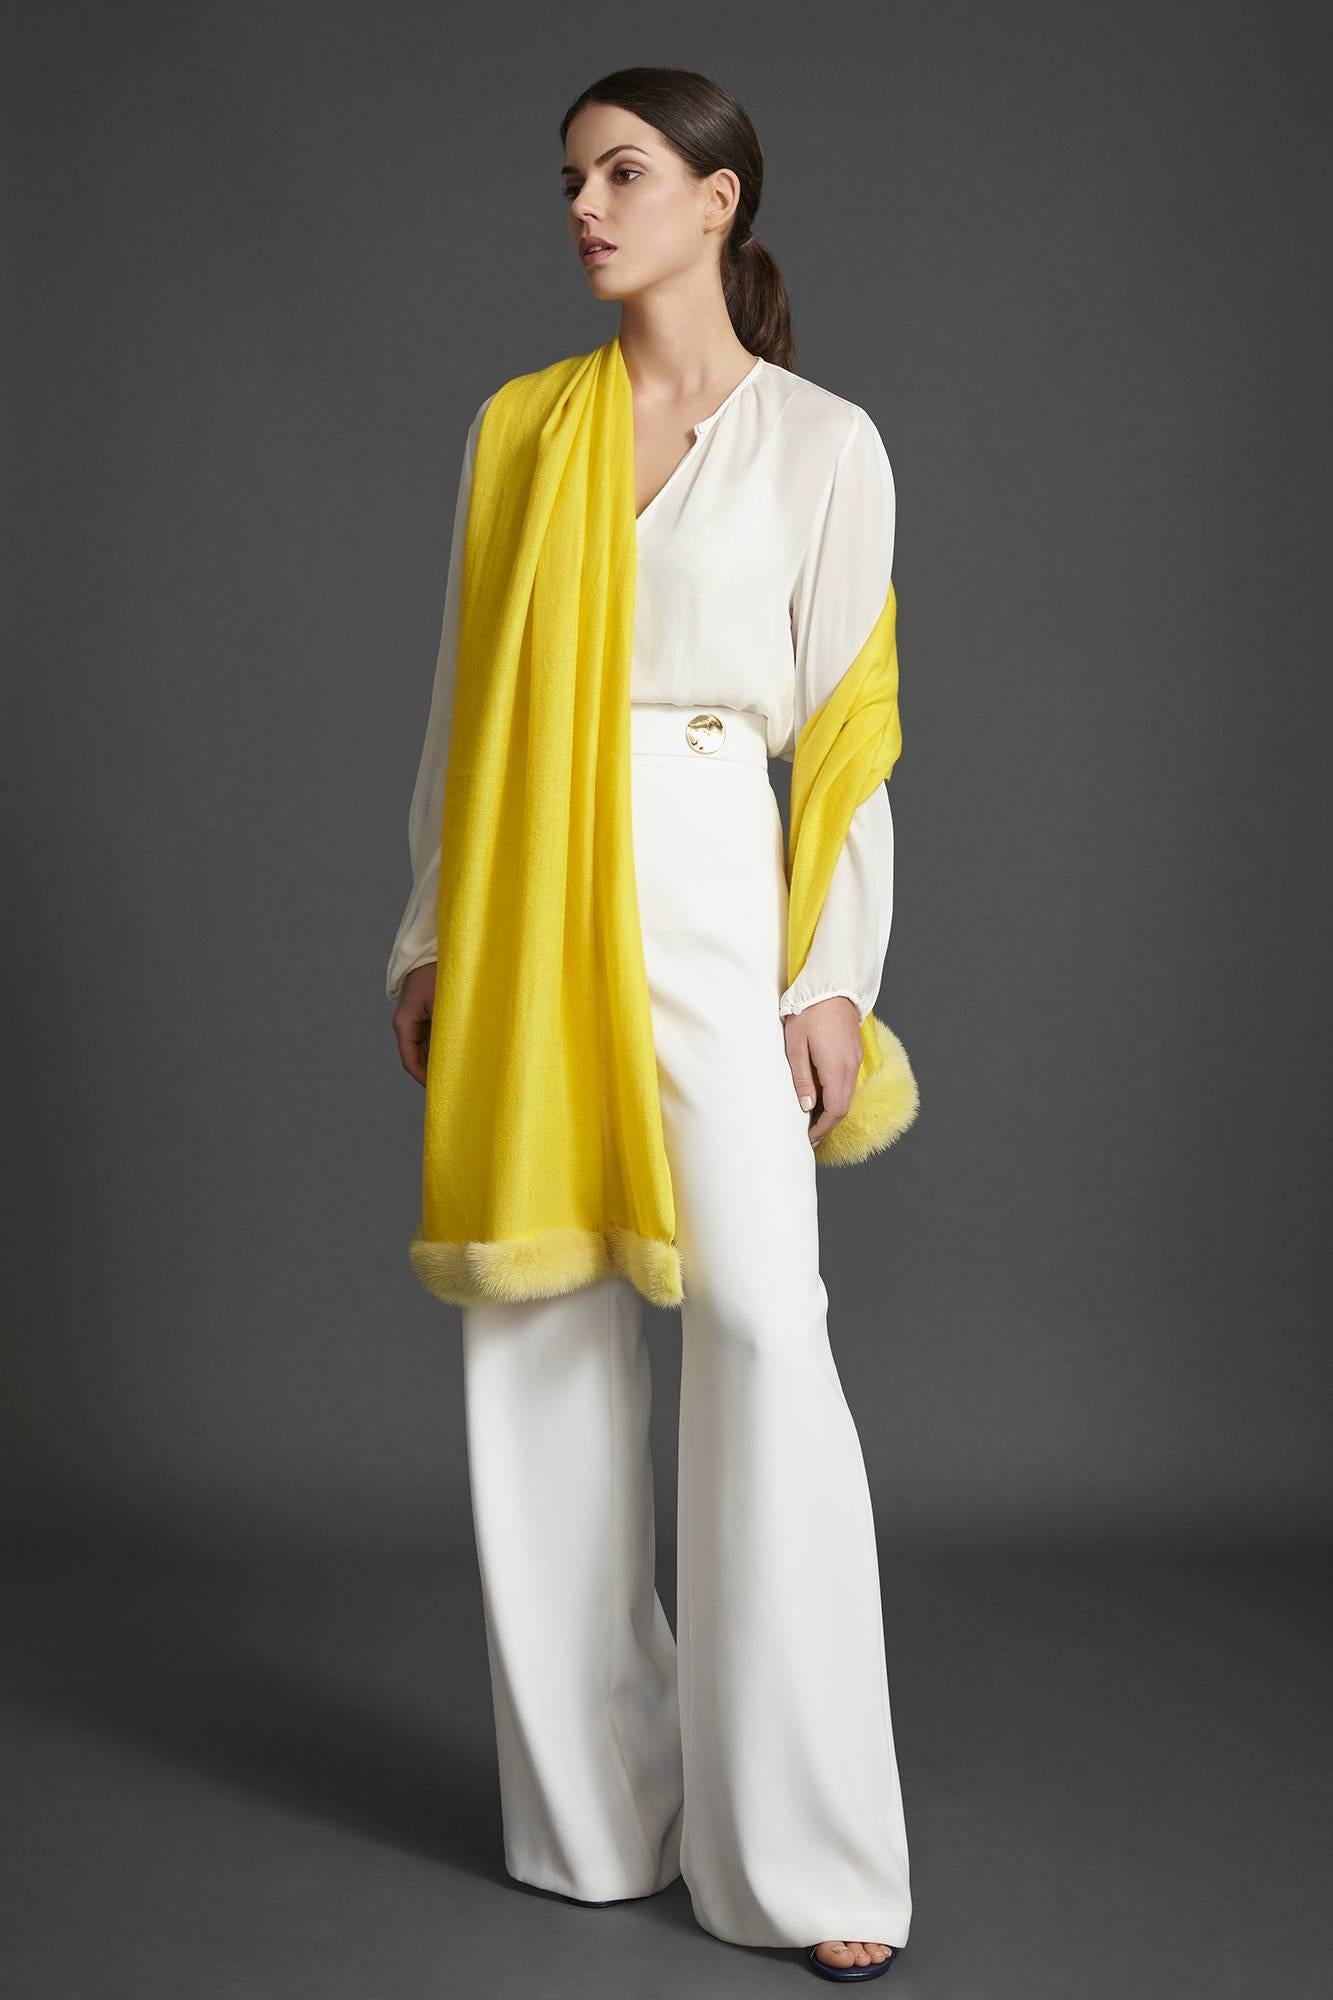 Women's or Men's Verheyen London Handwoven Mink Fur Trimmed Cashmere Shawl in Yellow